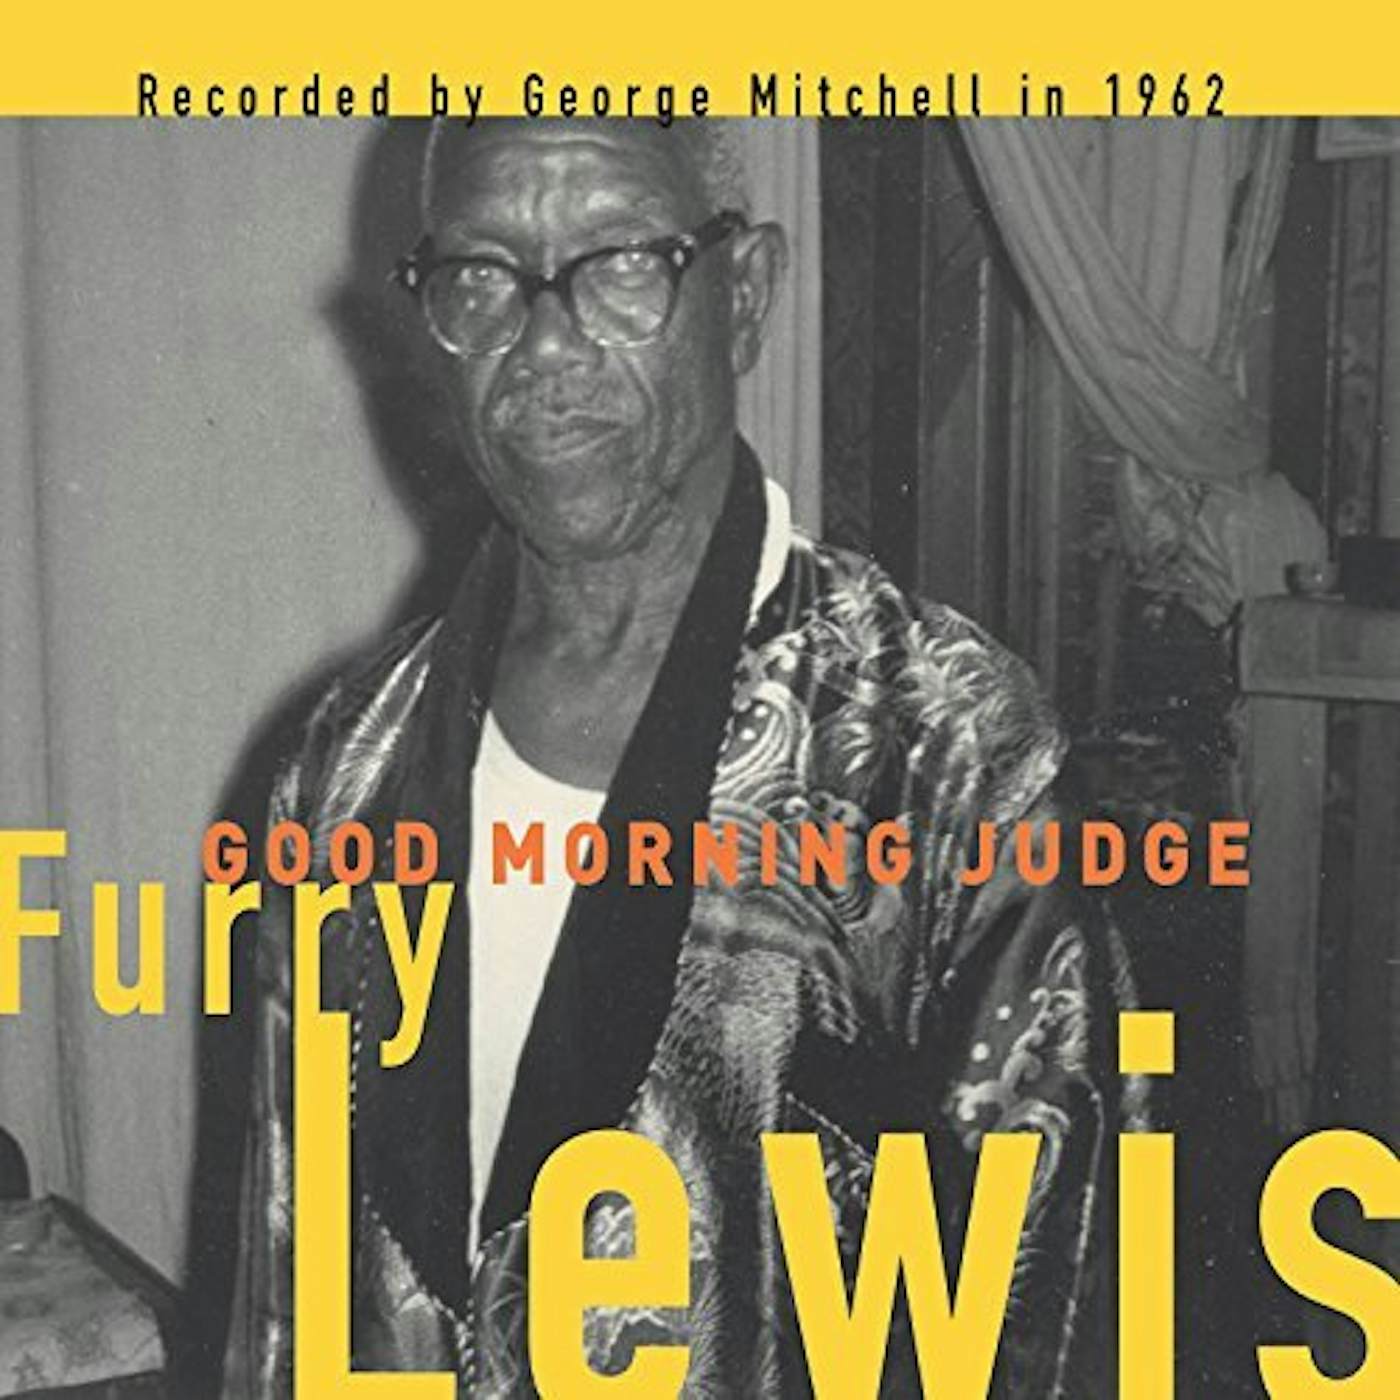 Furry Lewis Good Morning Judge Vinyl Record